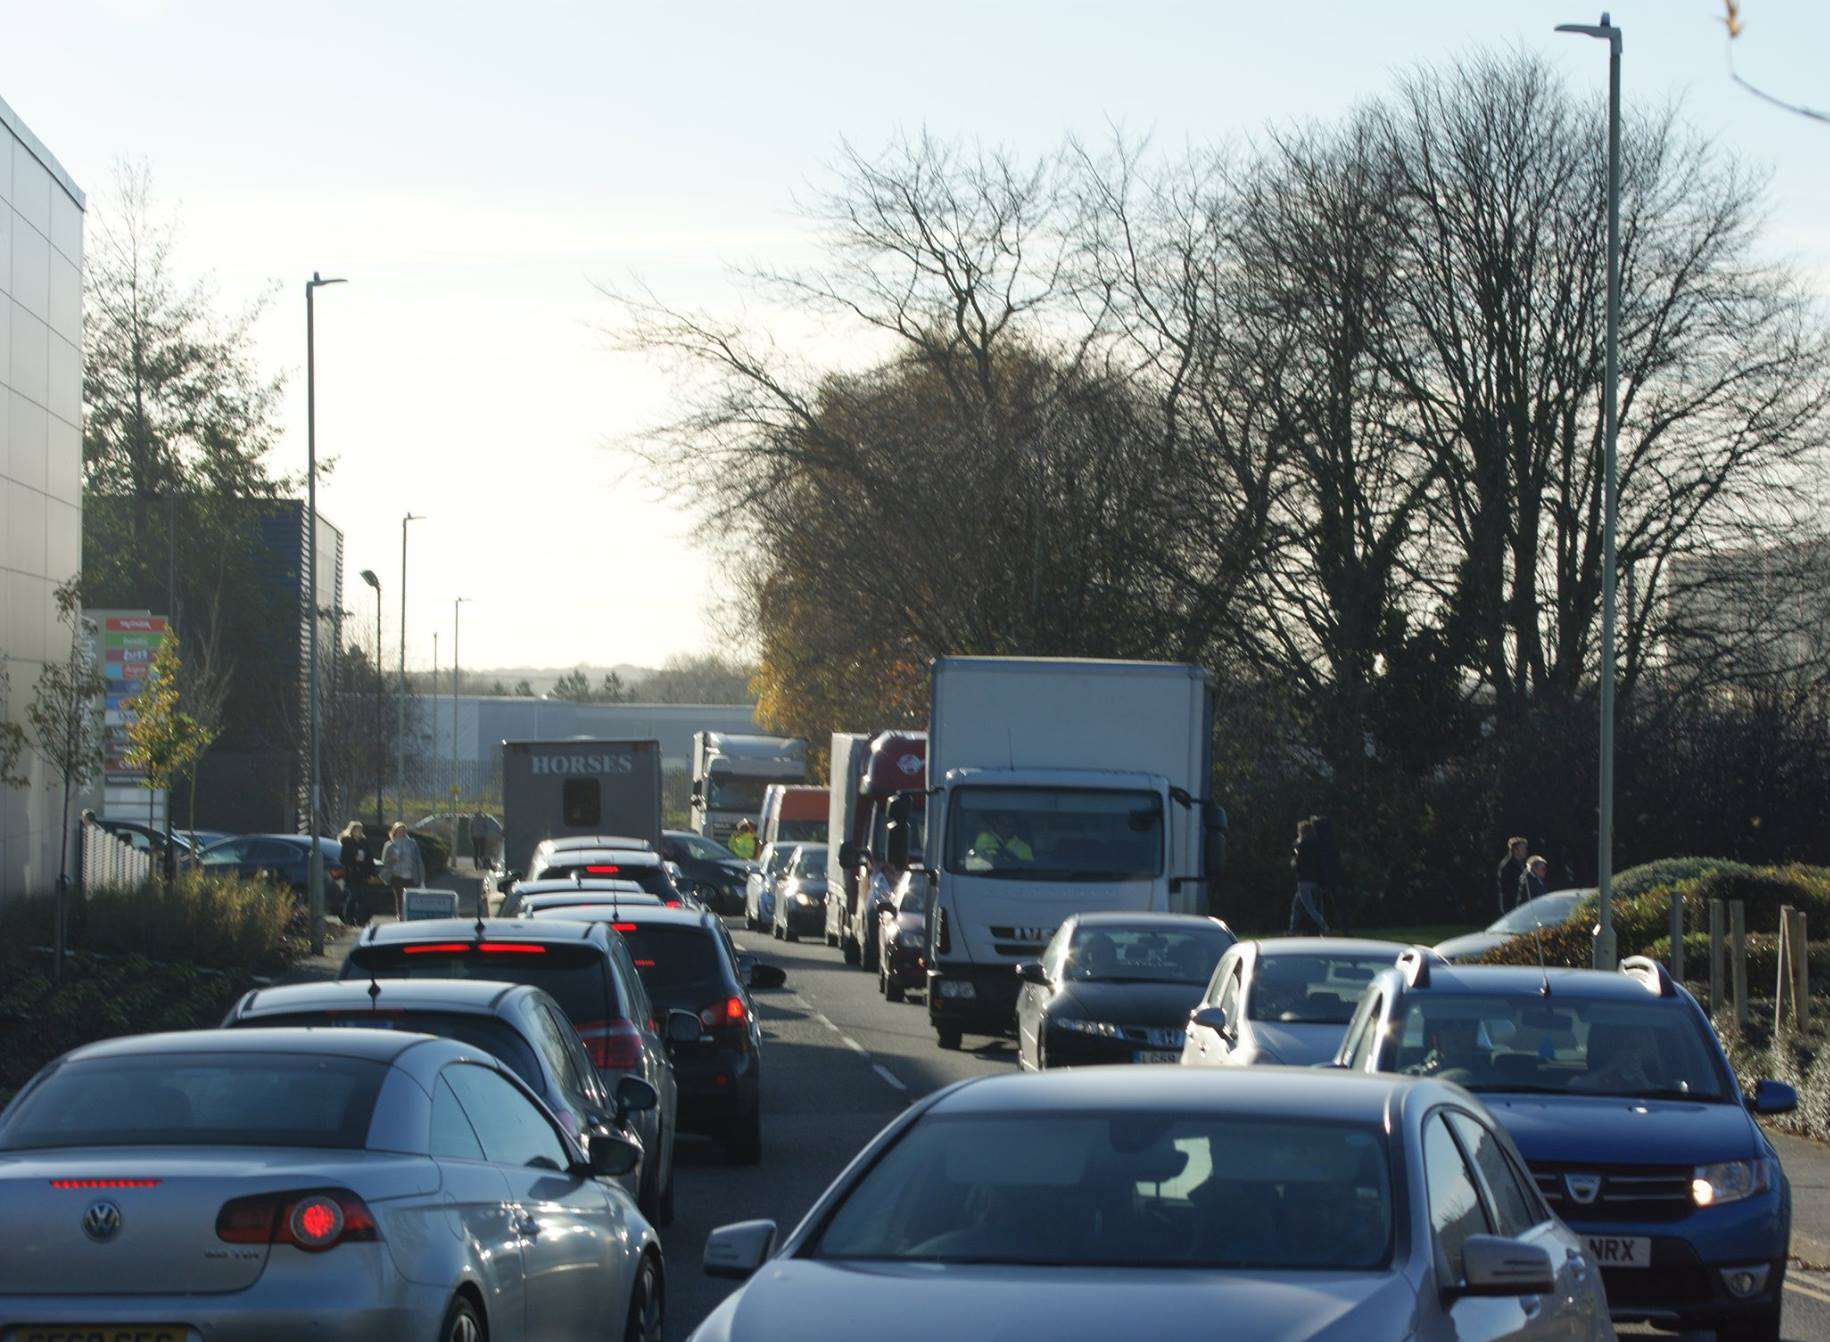 The traffic in Barrey Road, Sevington. Credit: Ian Sharp